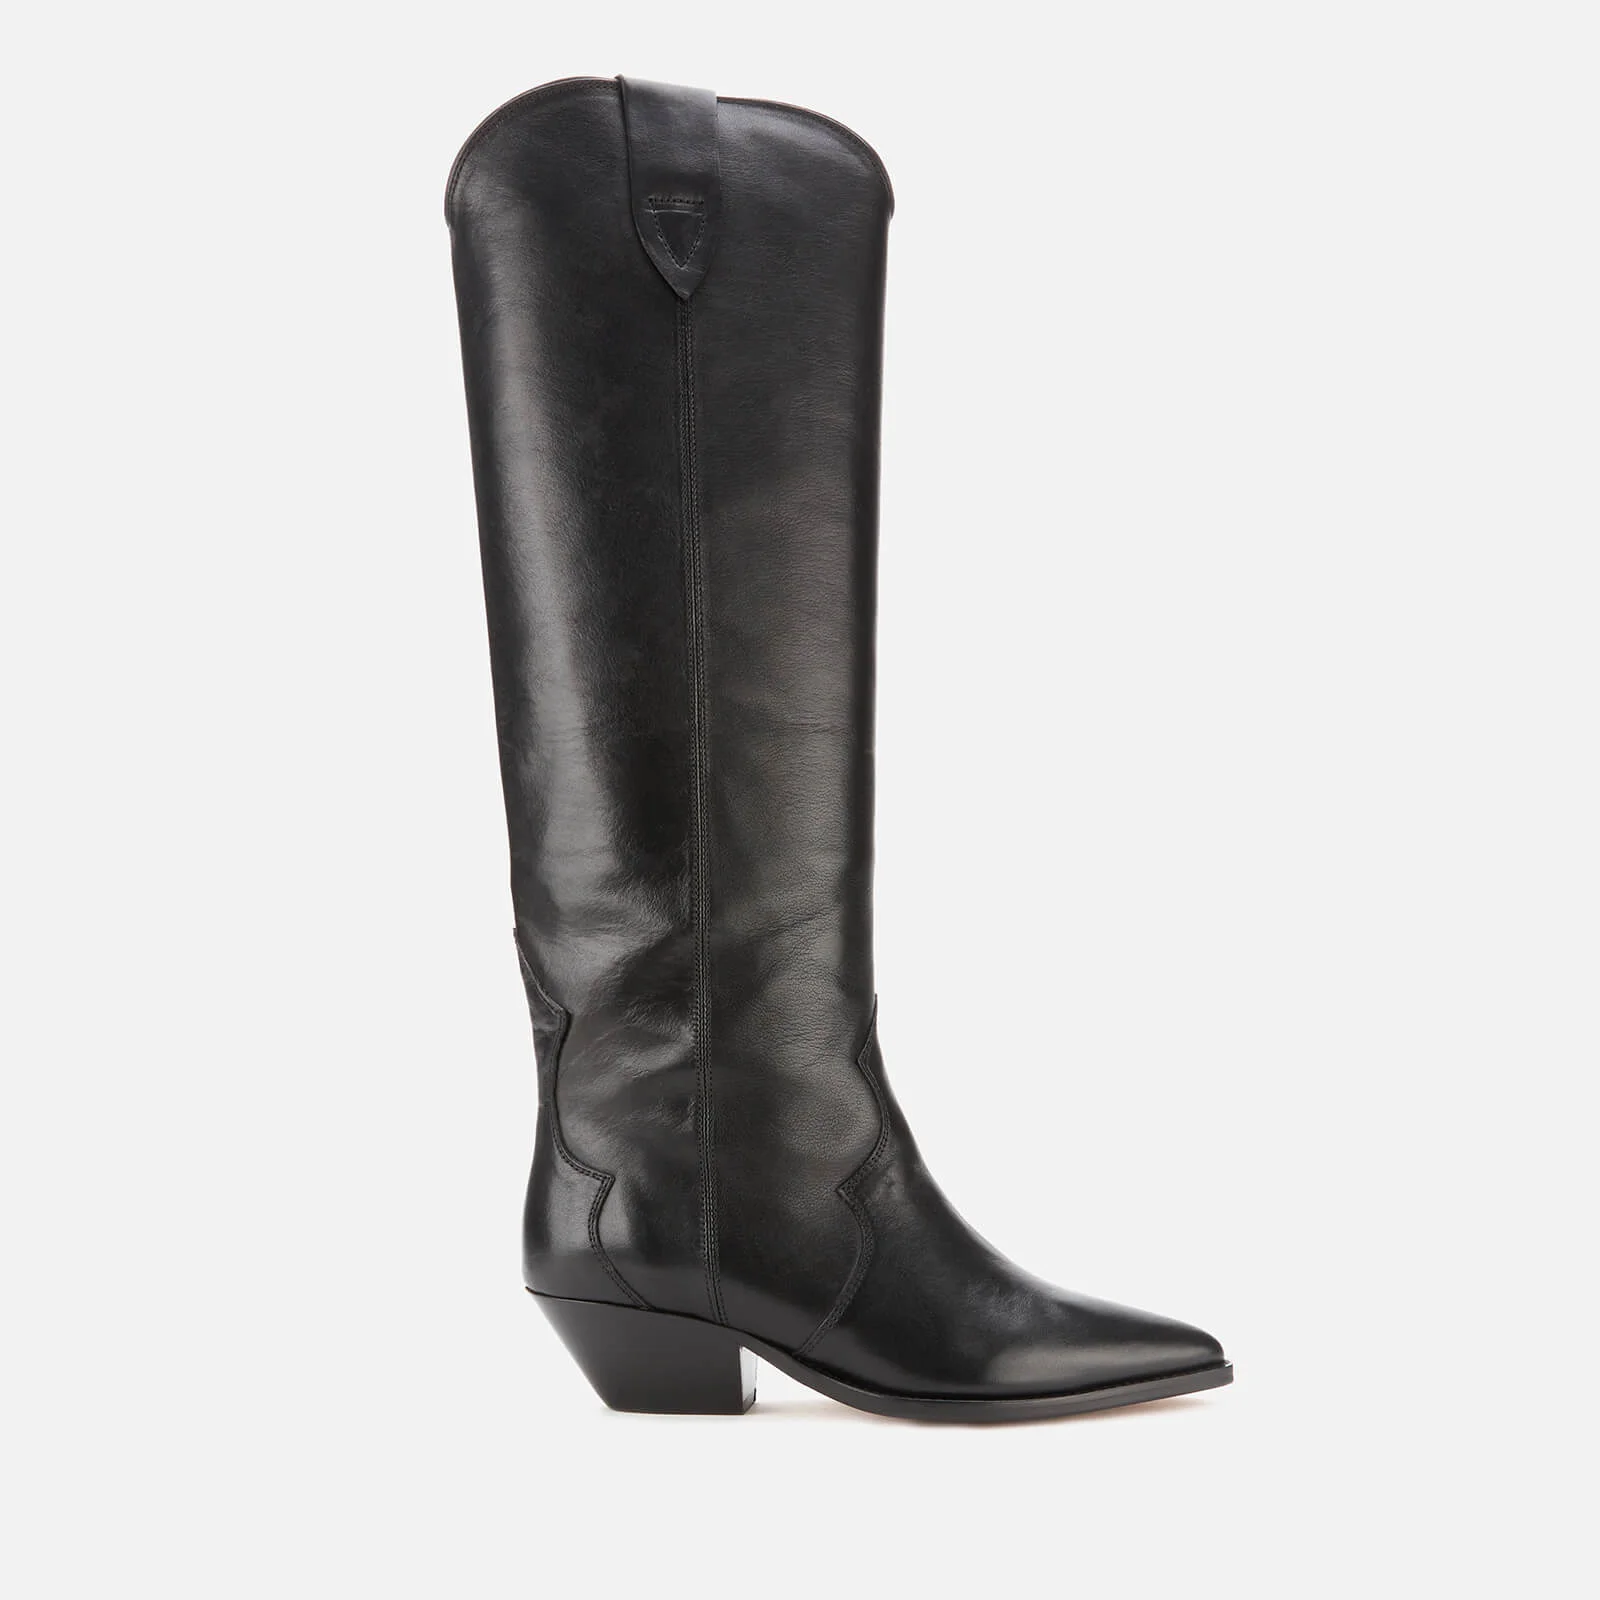 Isabel Marant Women's Denvee Leather Knee High Boots - Black Image 1